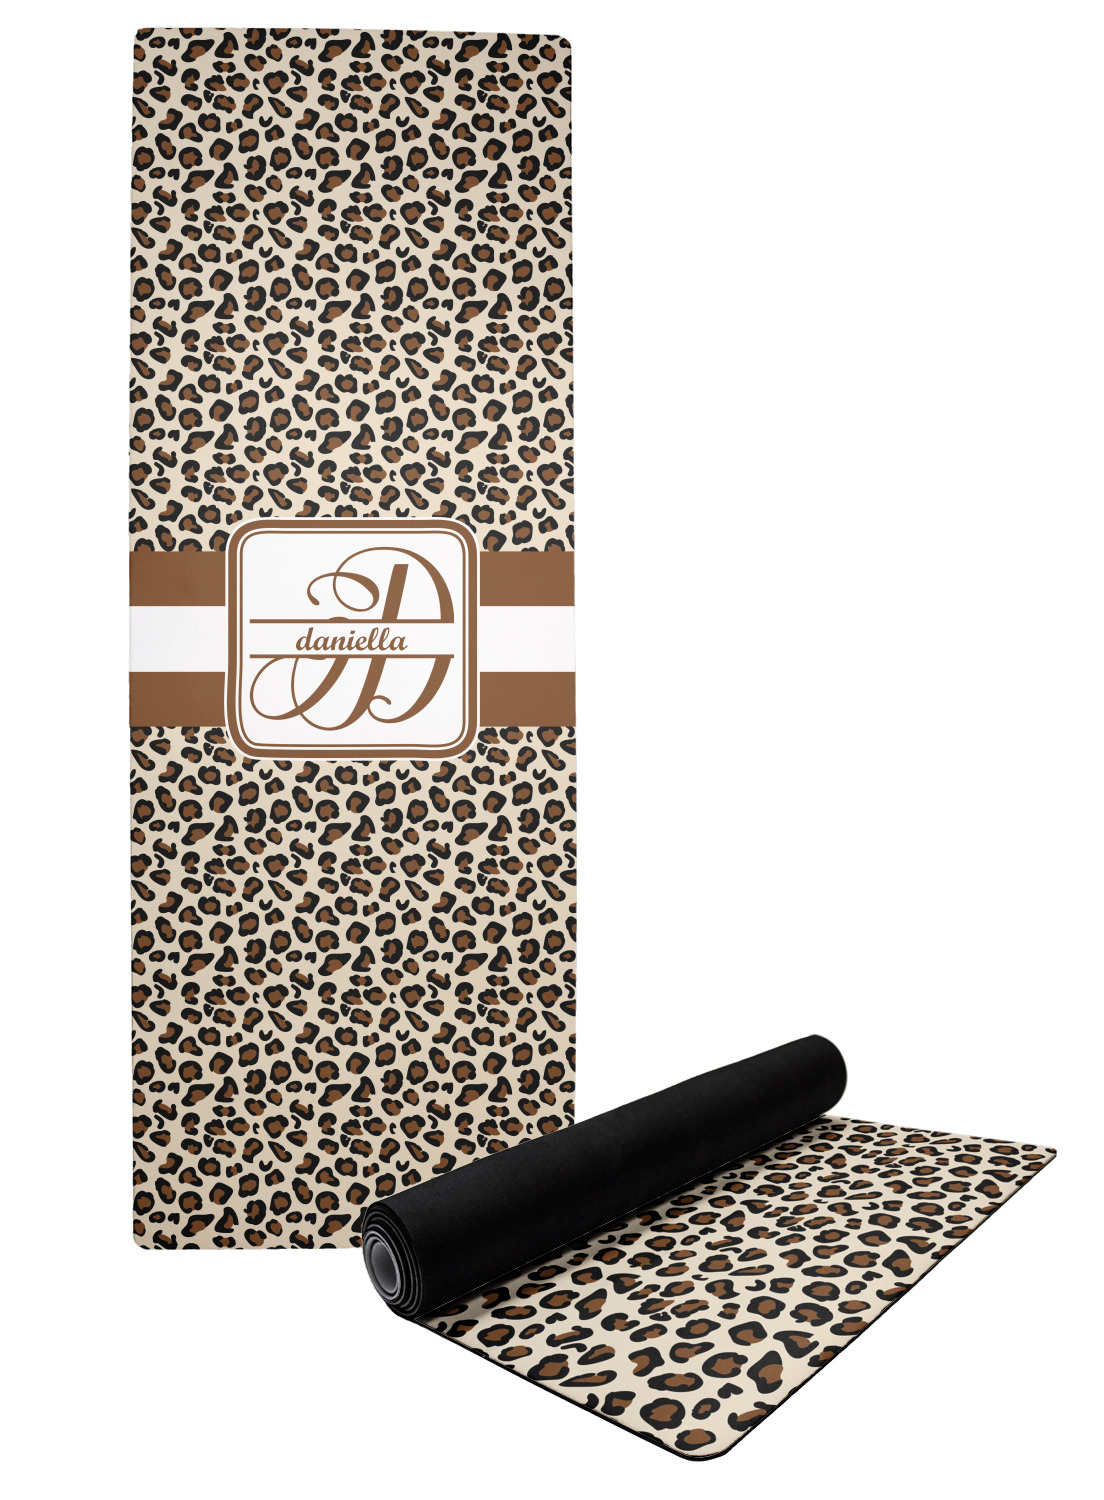 Leopard Print Rubber Yoga Mat